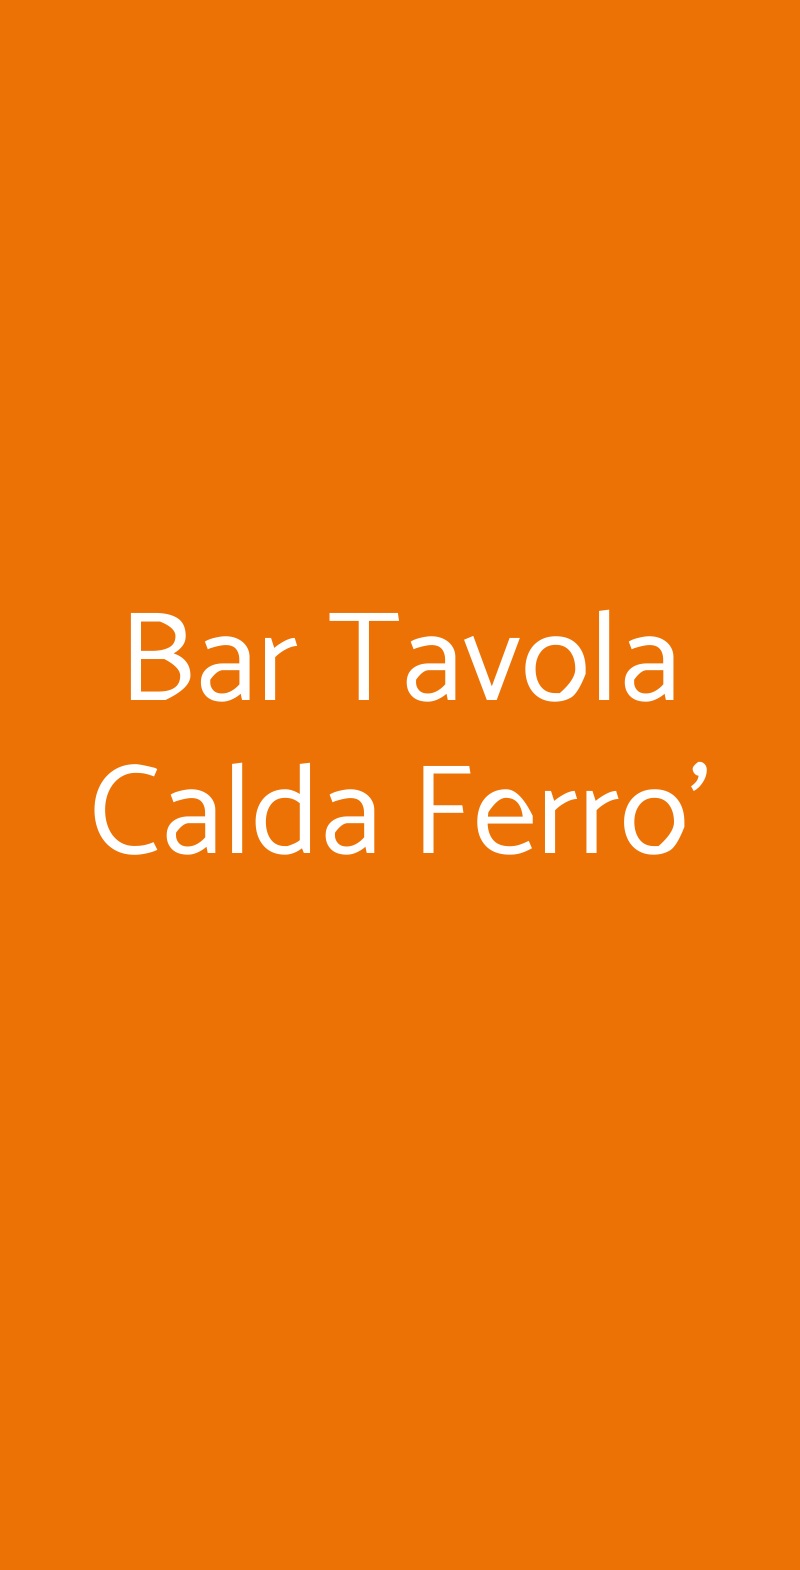 Bar Tavola Calda Ferro' Formia menù 1 pagina